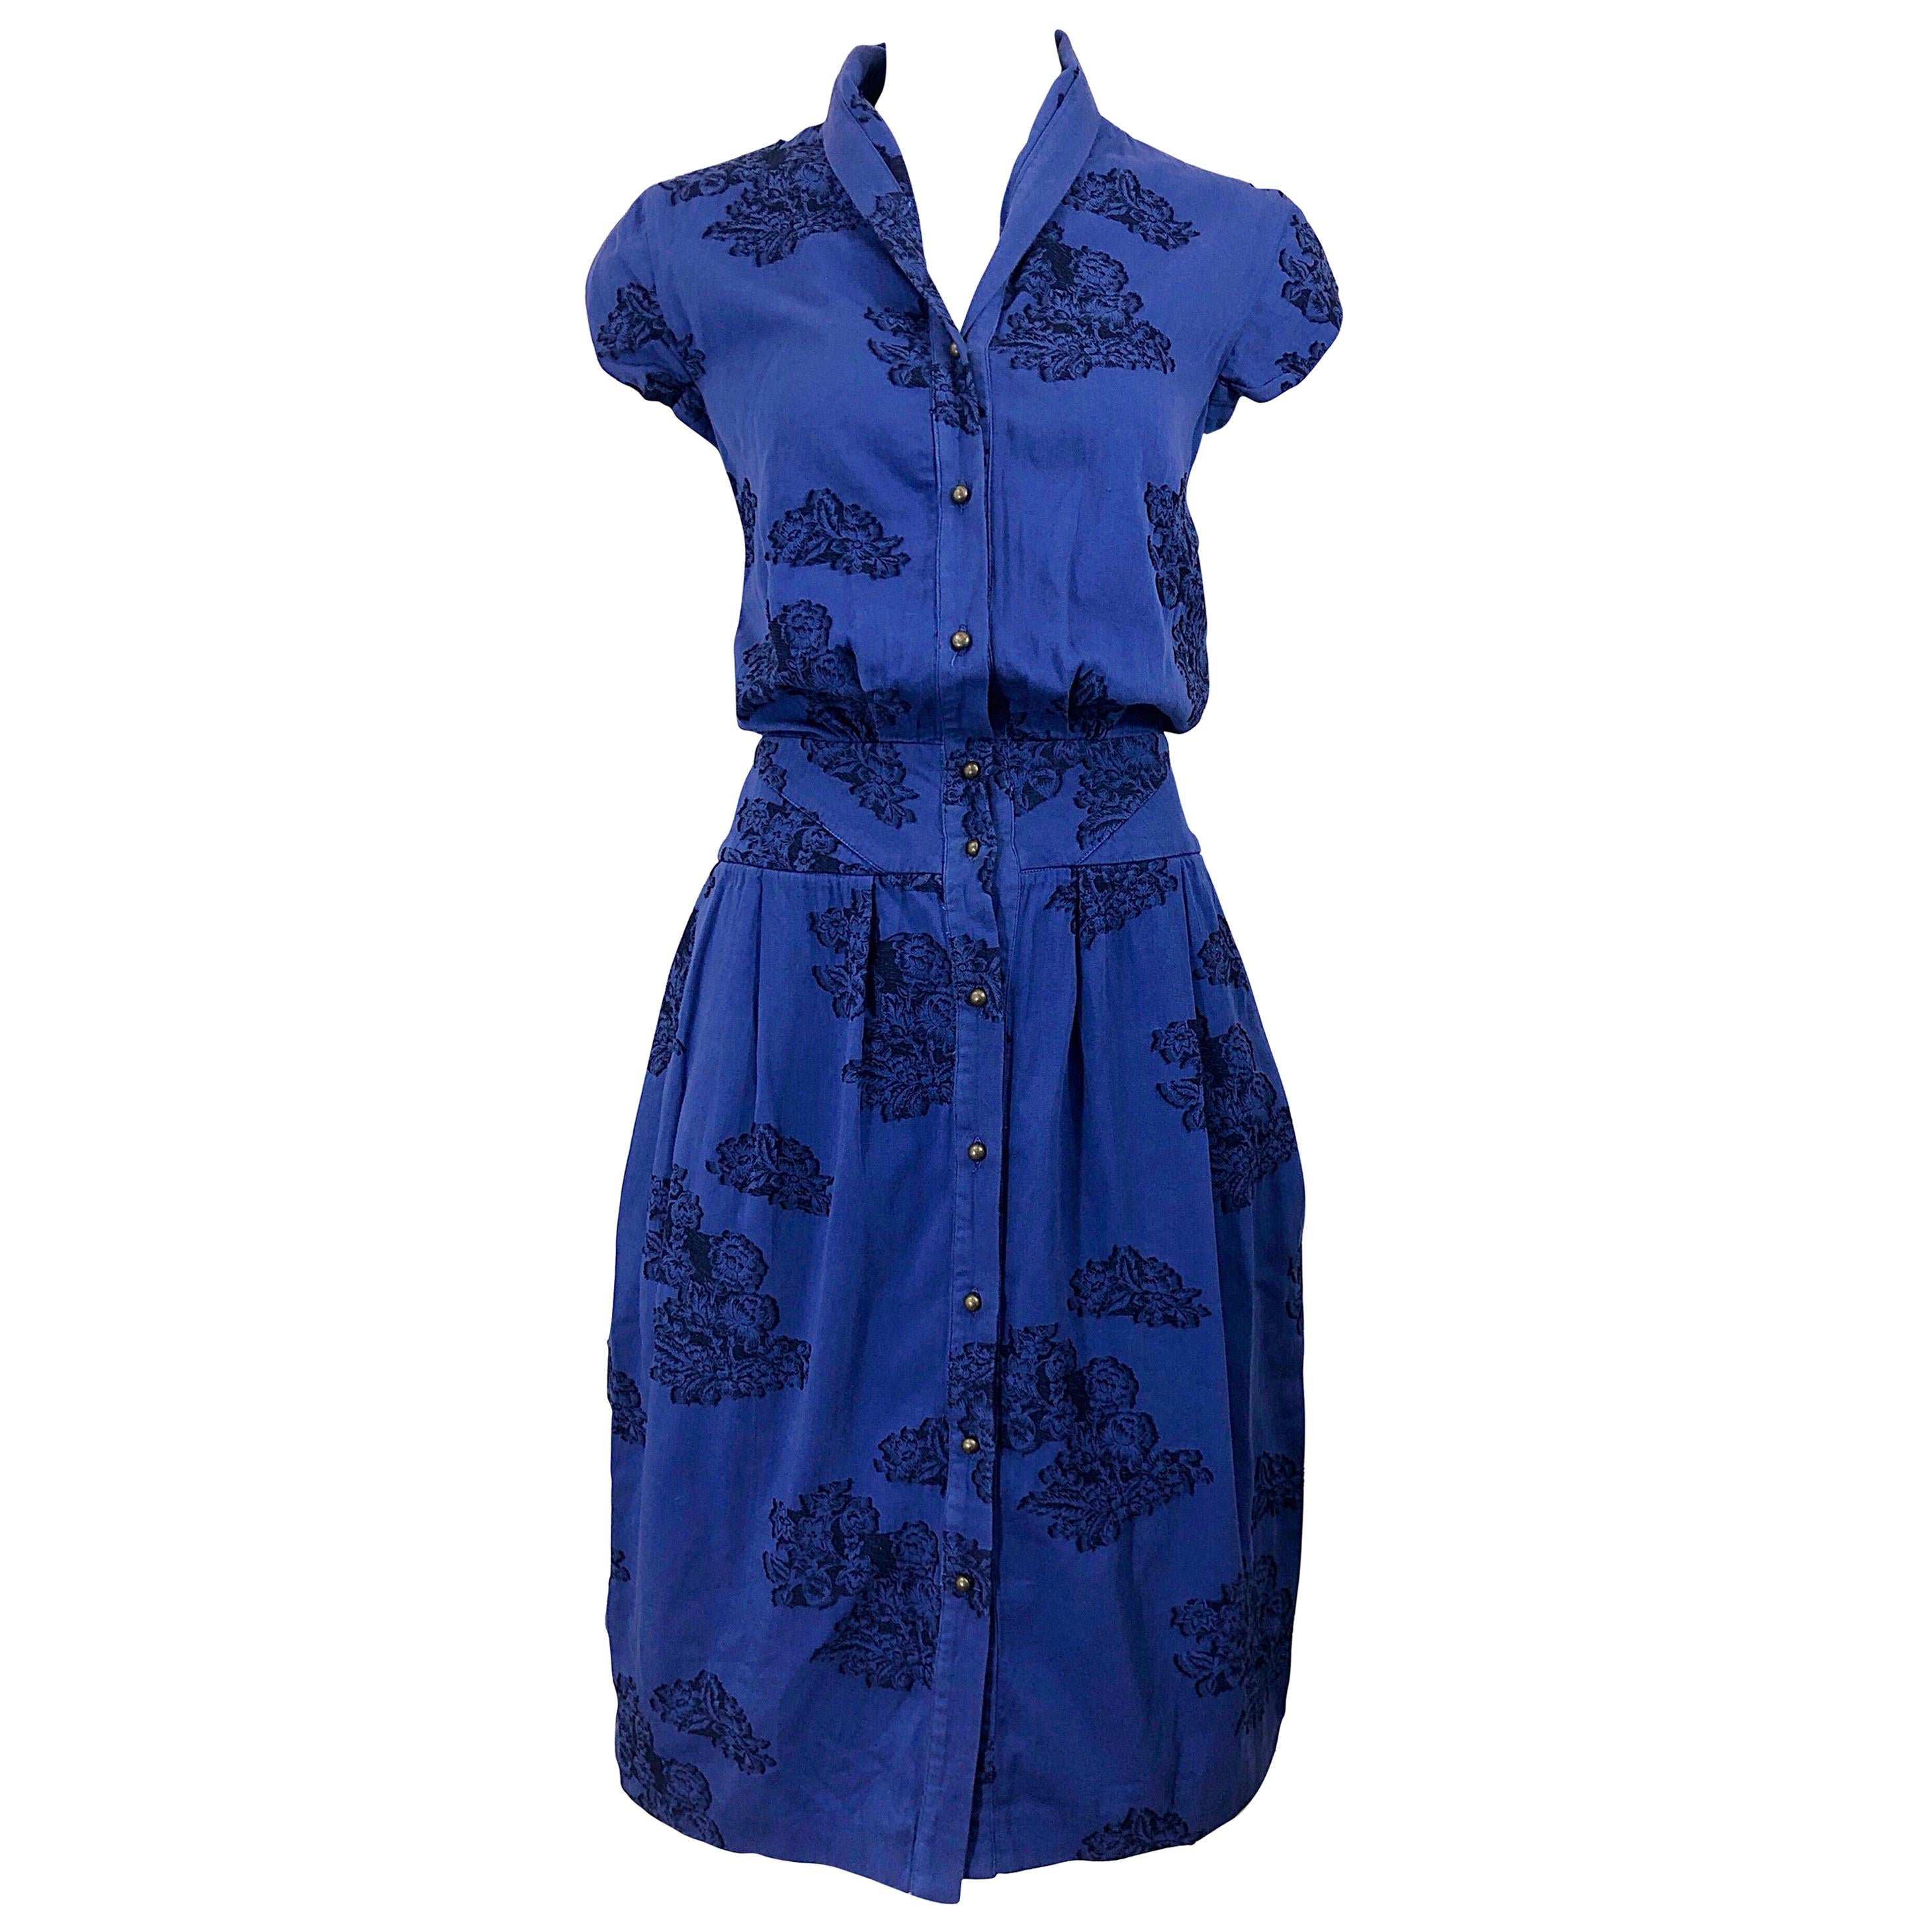 Alexander McQueen Blue + Black Lace Print Size 40 1950s Style Bustle Dress